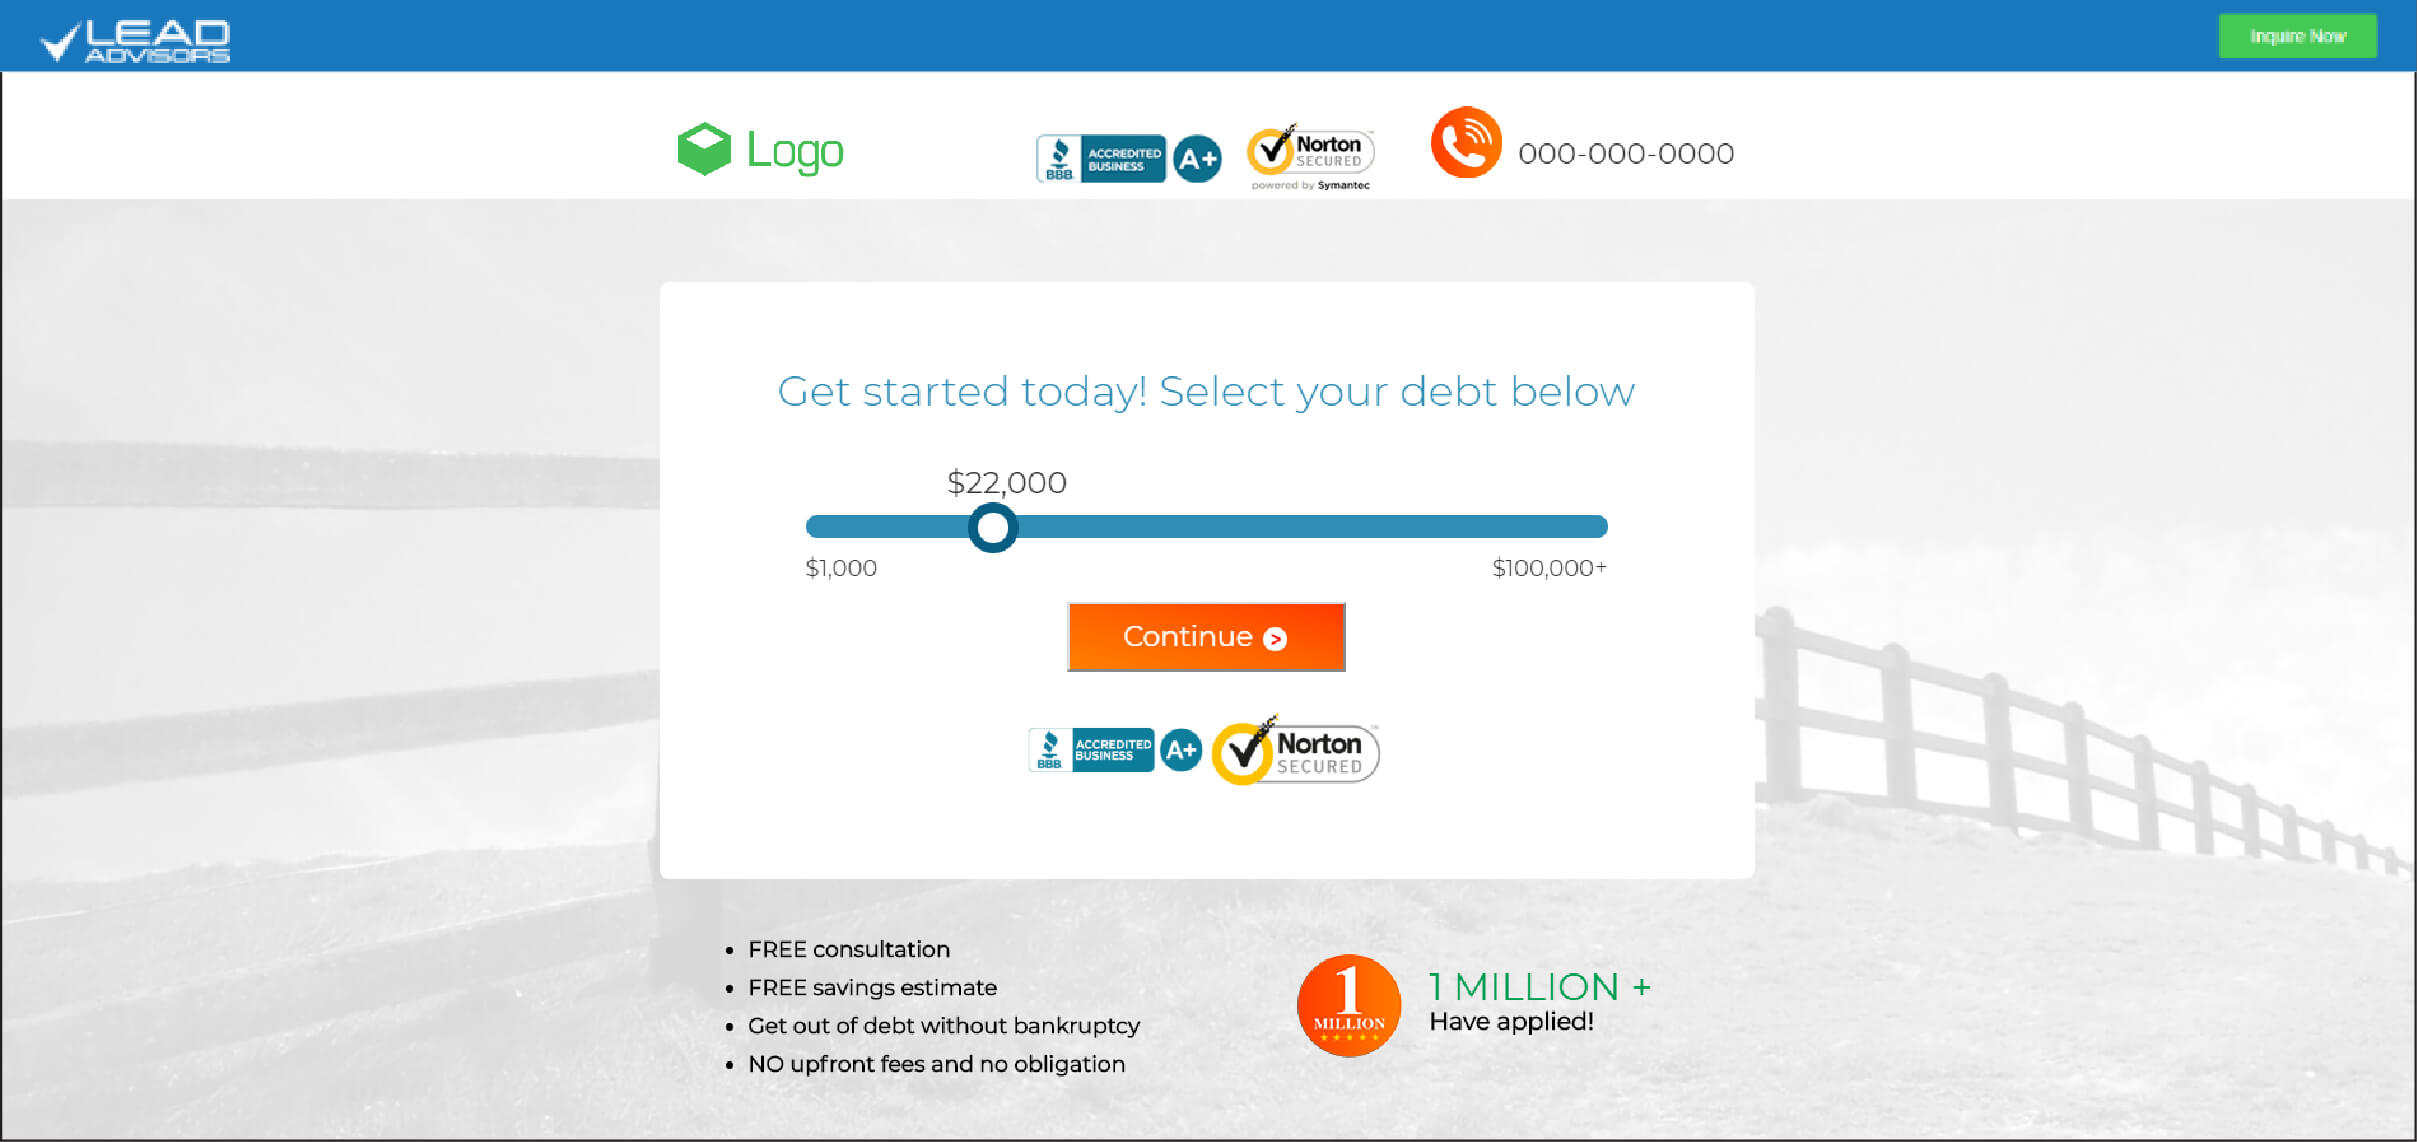 LeadAds landing page - debt selection screen